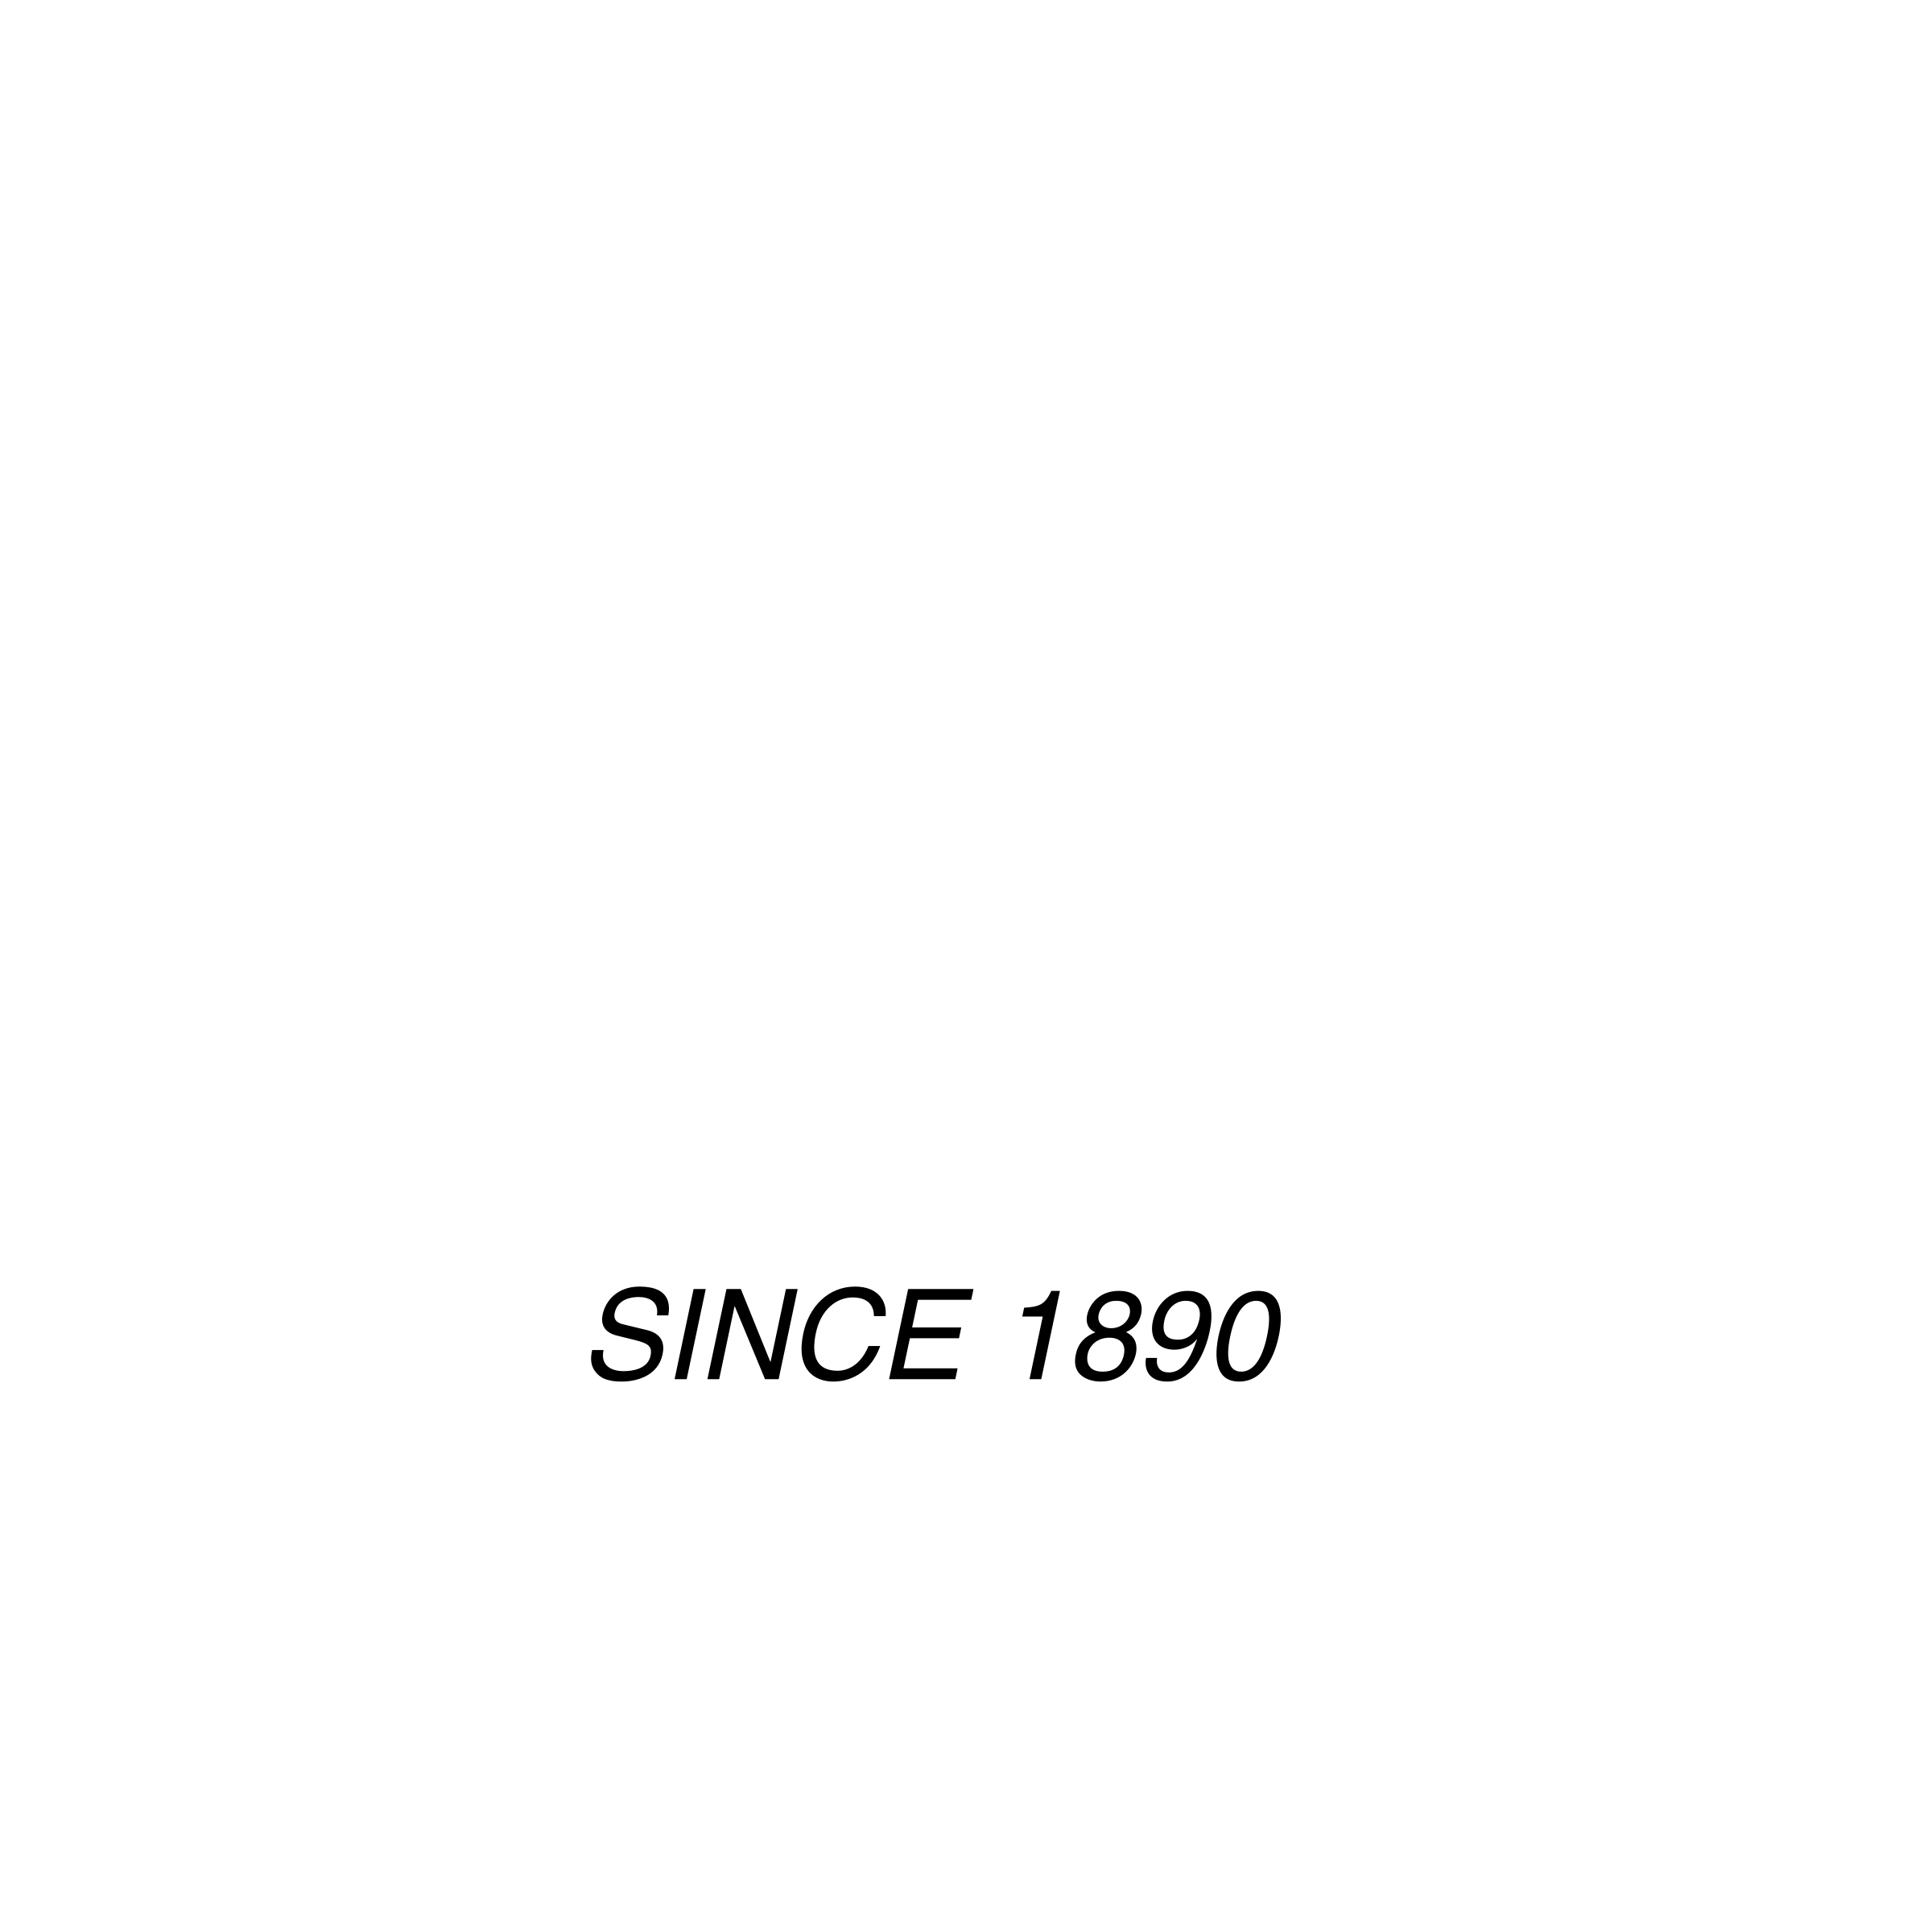 Conn's Logo - Conn's Logo PNG Transparent & SVG Vector - Freebie Supply